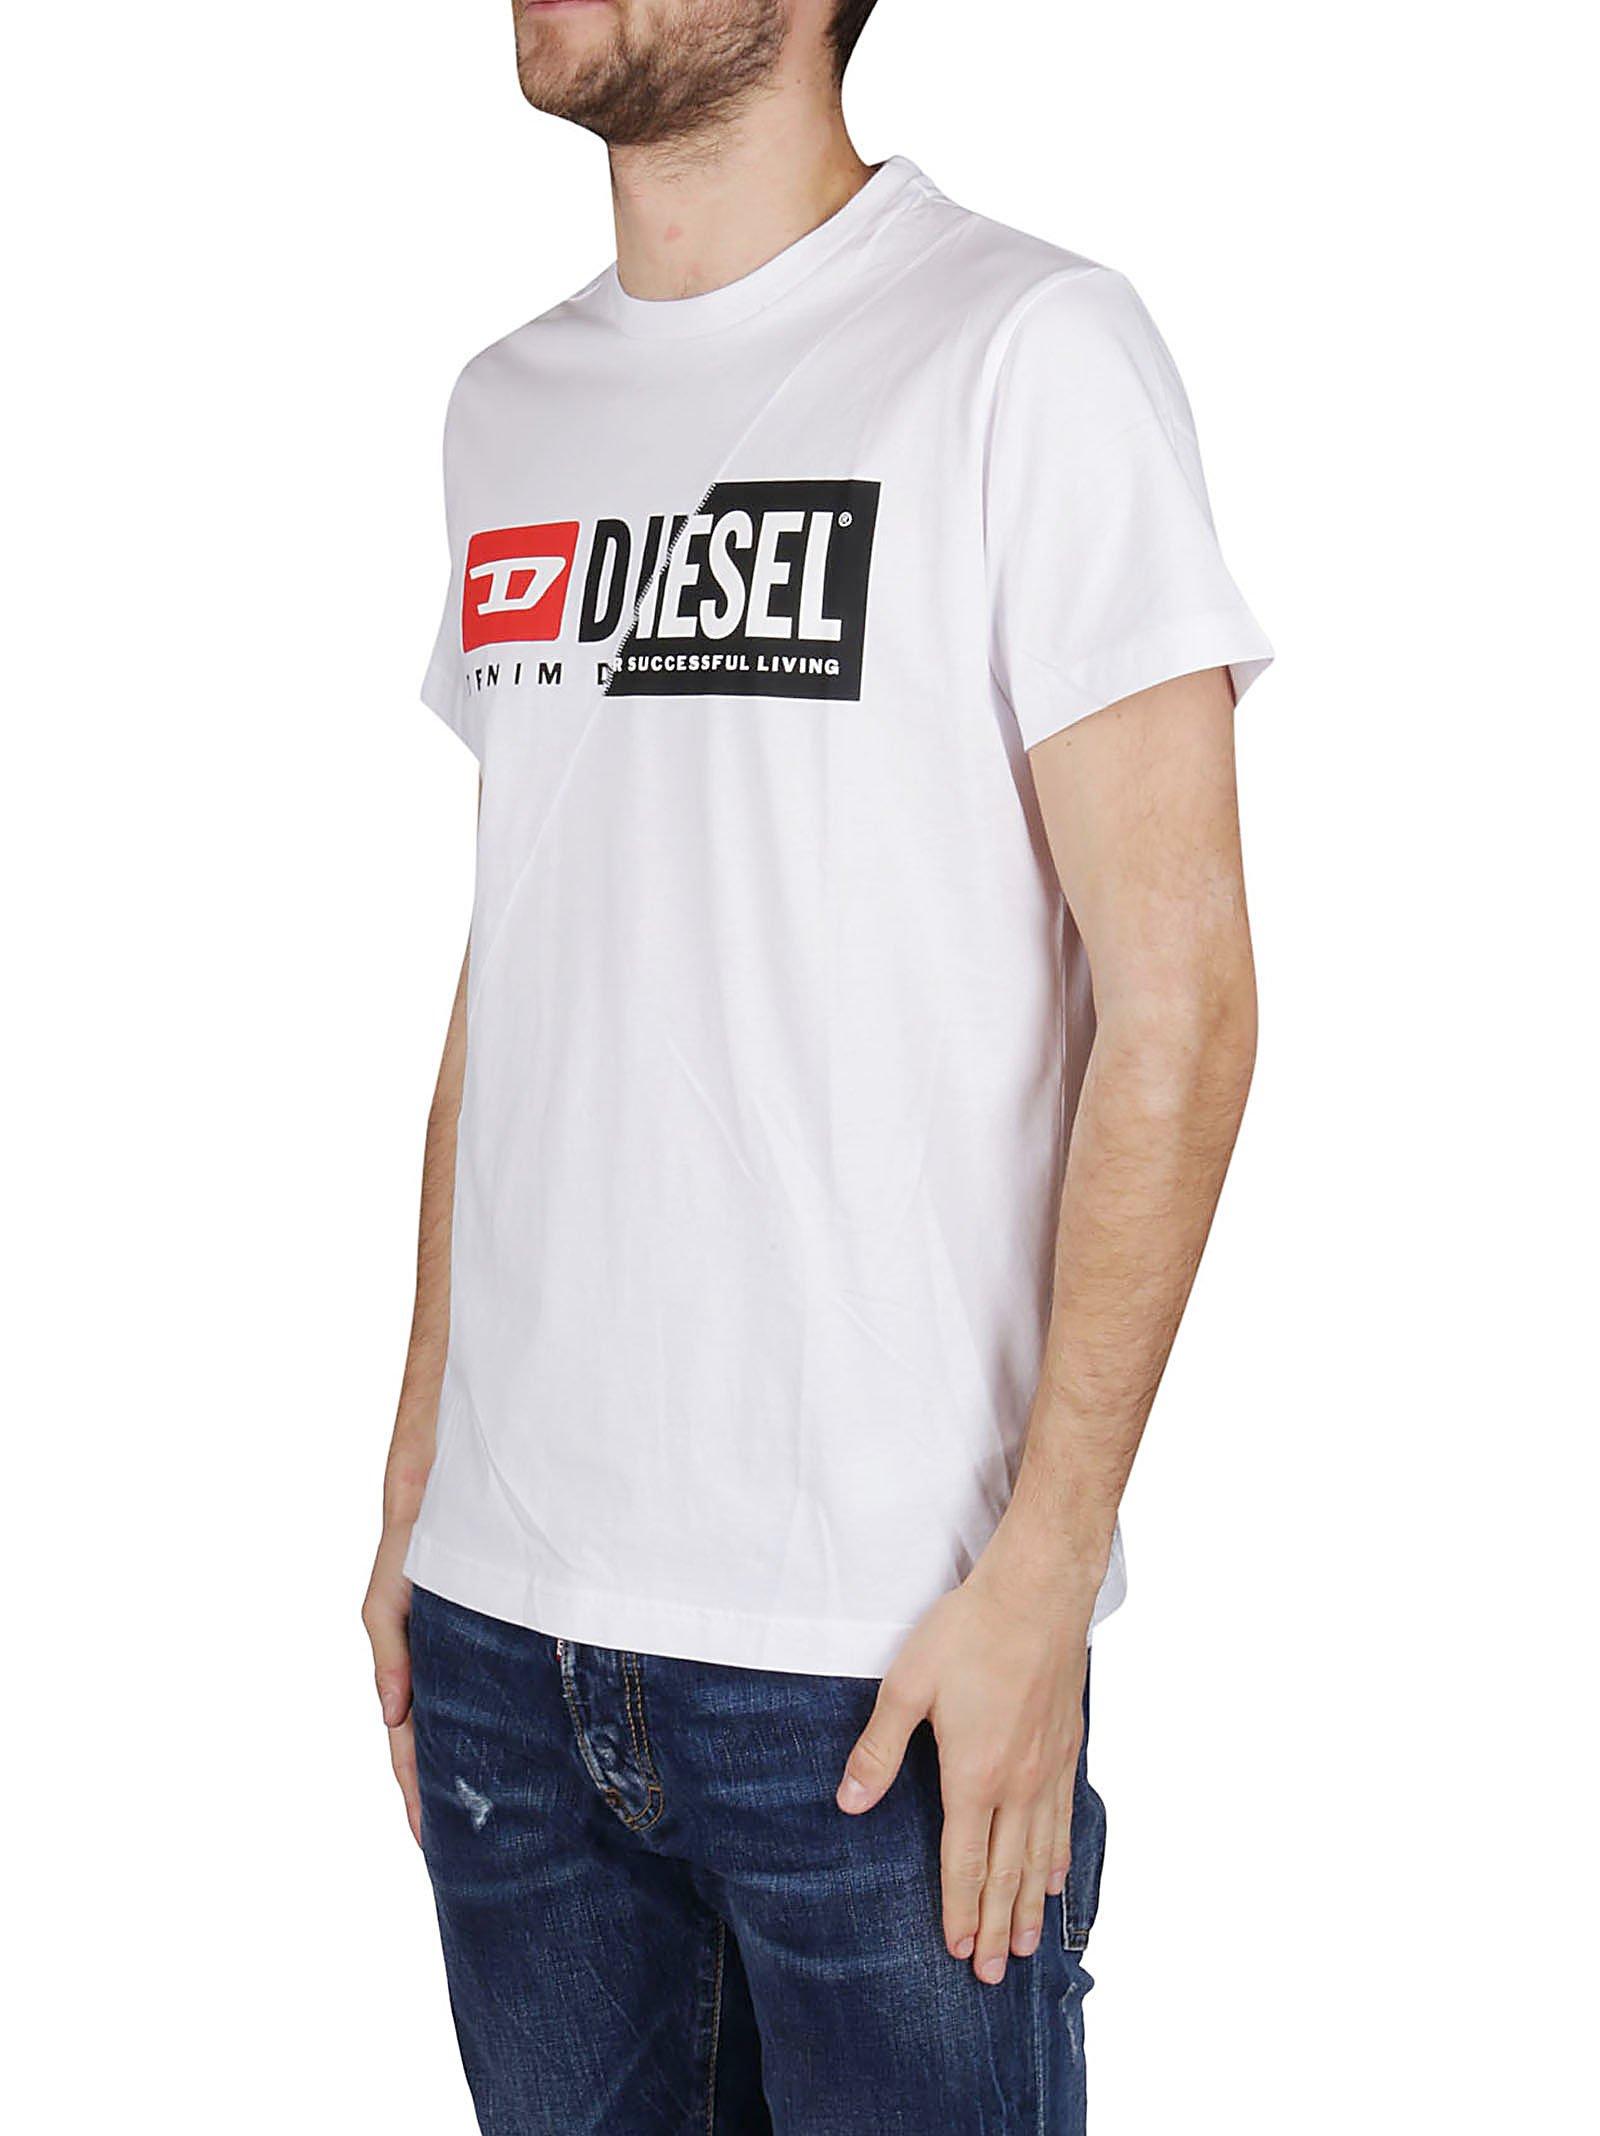 DIESEL Cotton Dual Logo Print T-shirt in White for Men - Lyst